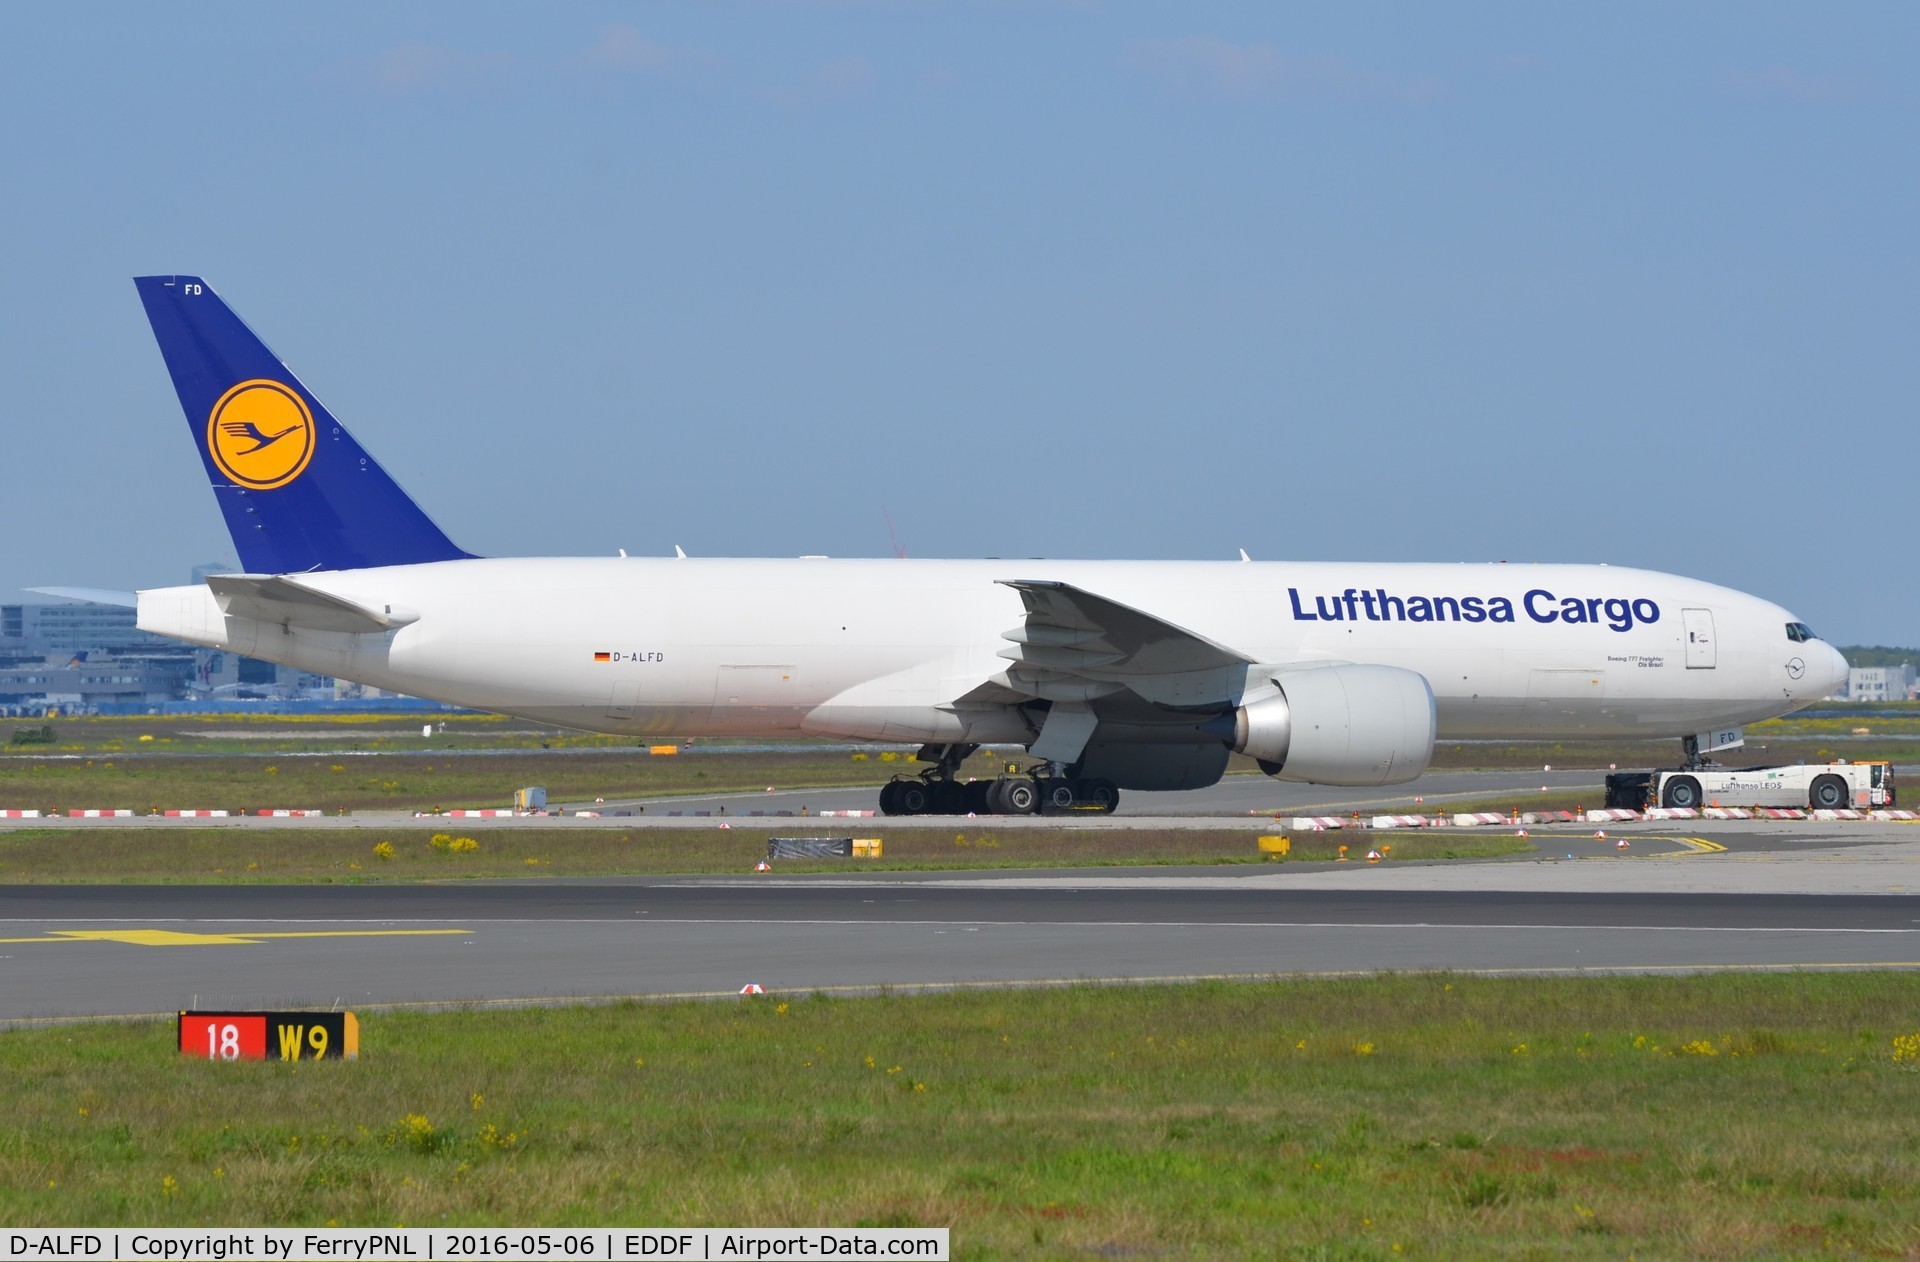 D-ALFD, 2014 Boeing 777-FBT C/N 41677, Lufthansa Cargo B772F under tow to the maintenance area.